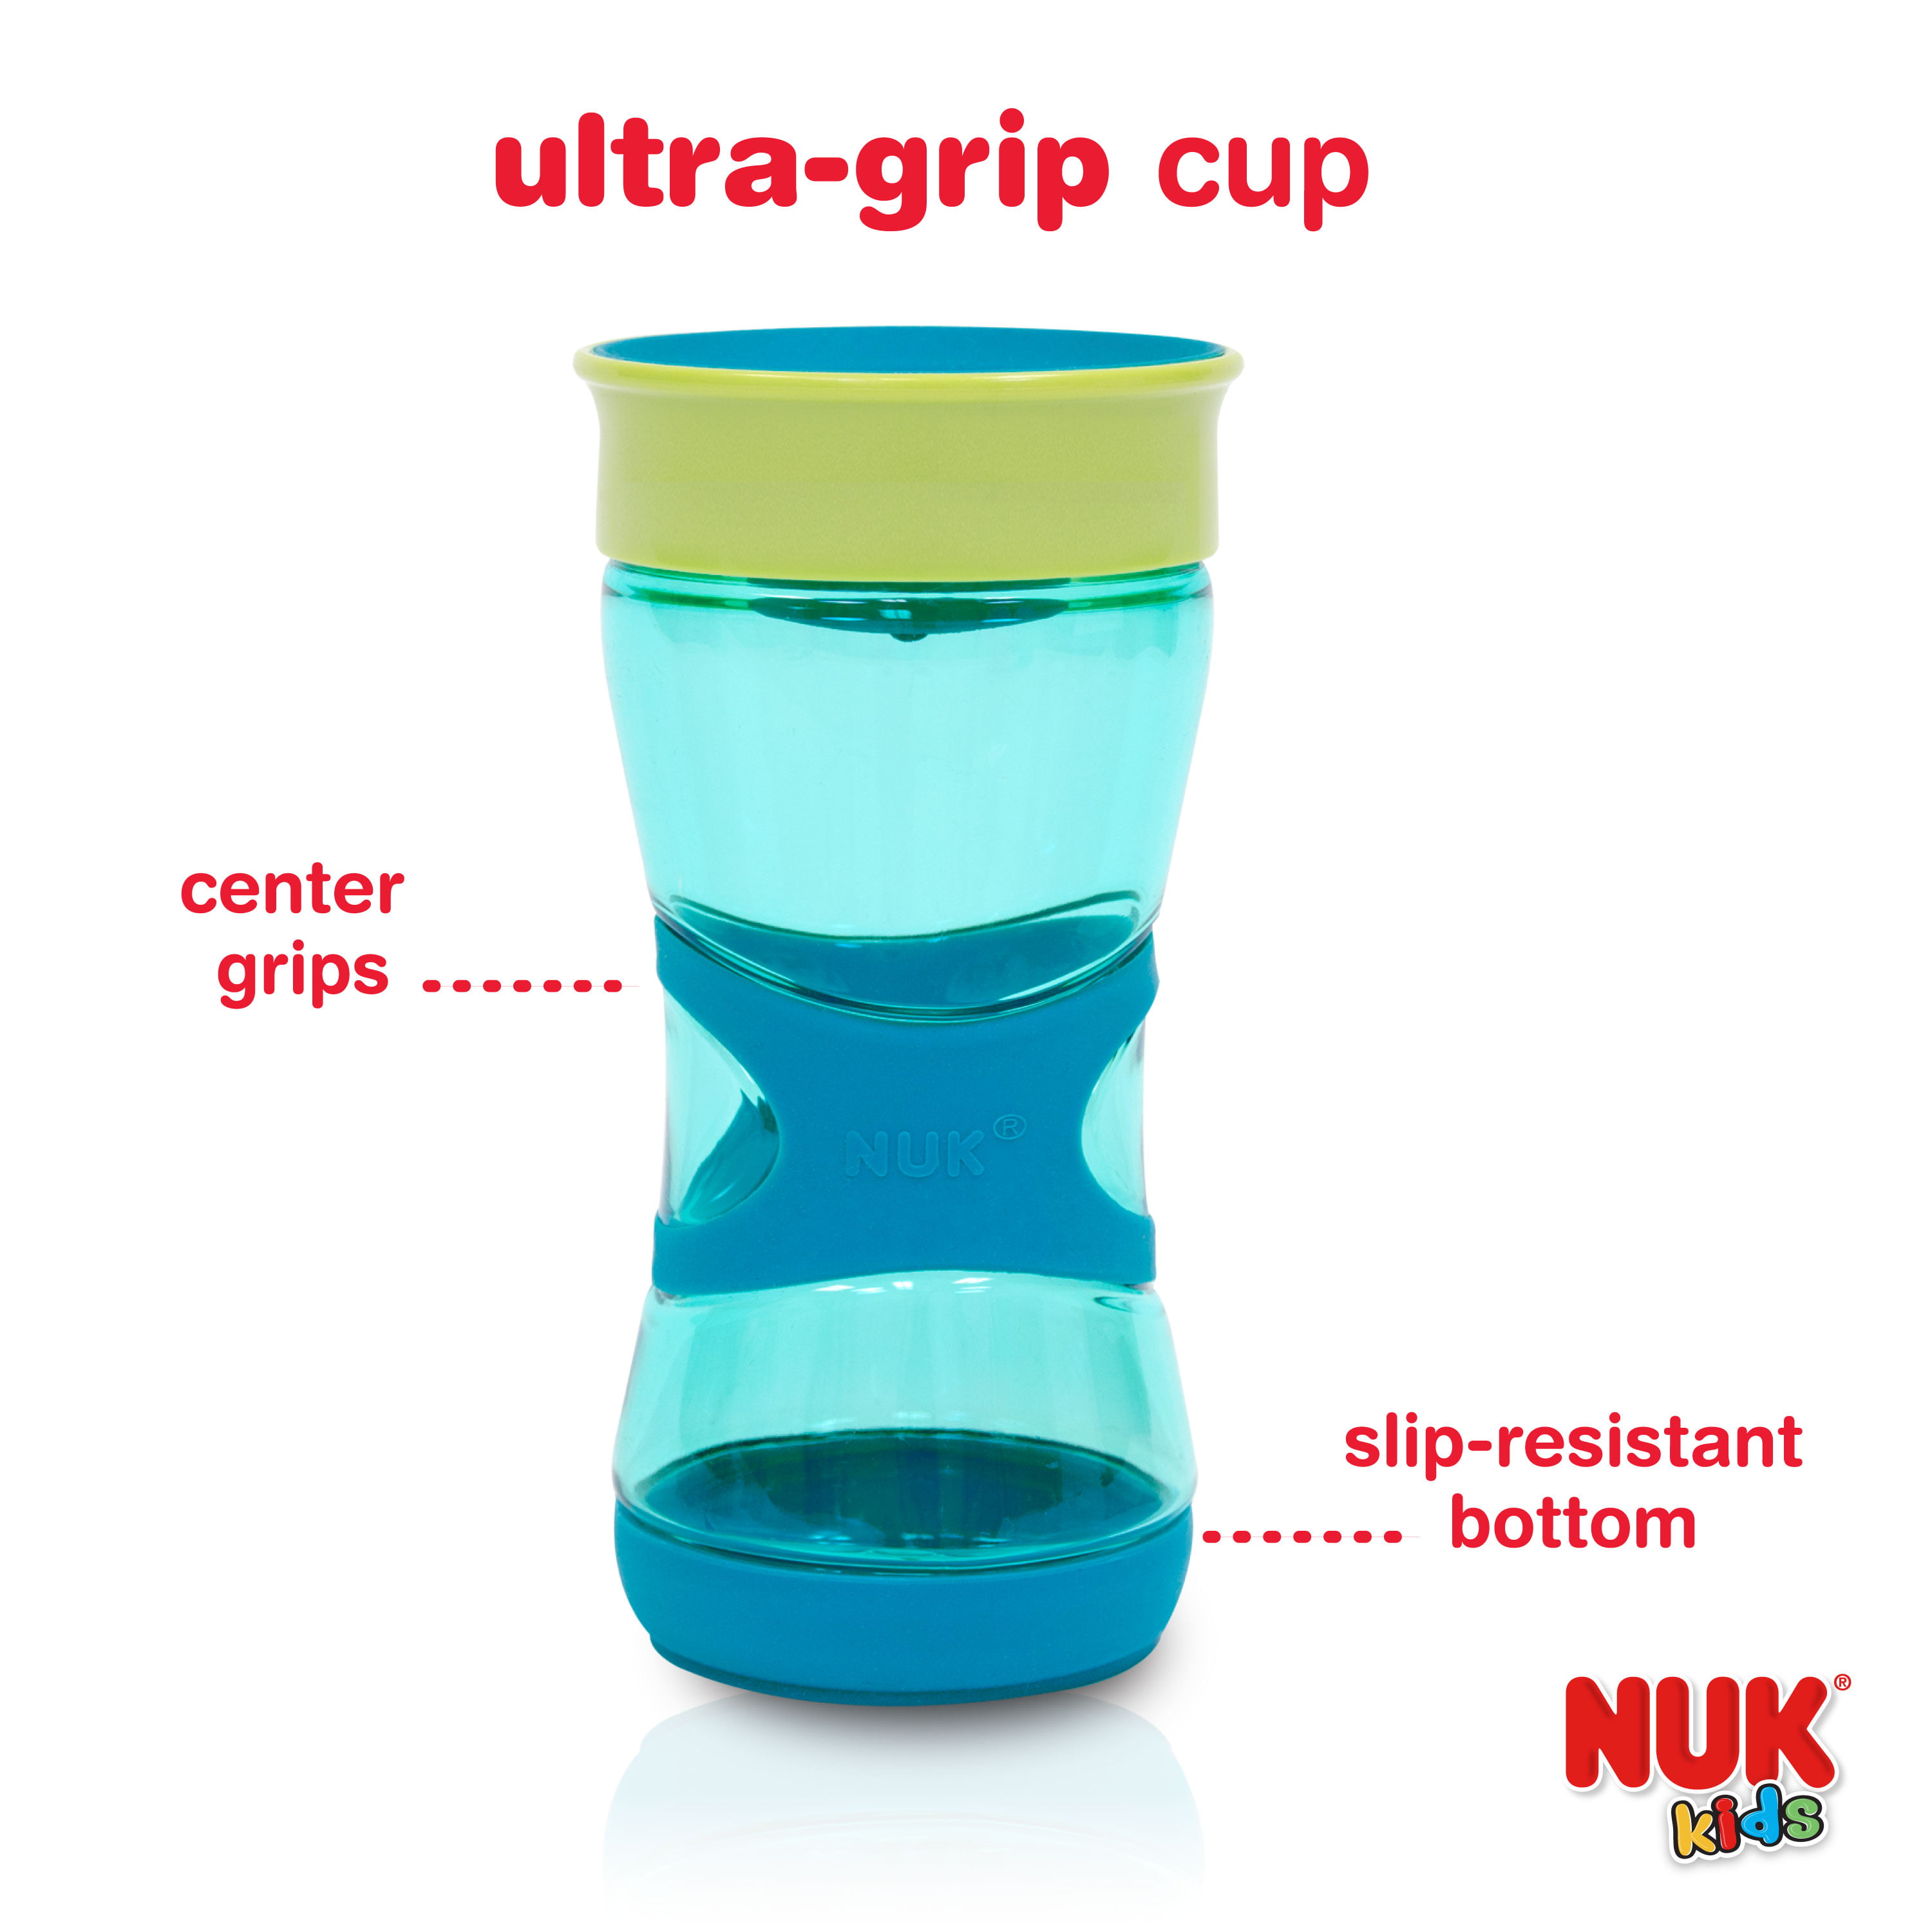 NUK Magic 360 Rim Ultra Grip Spoutless Cup, 10 ounce 